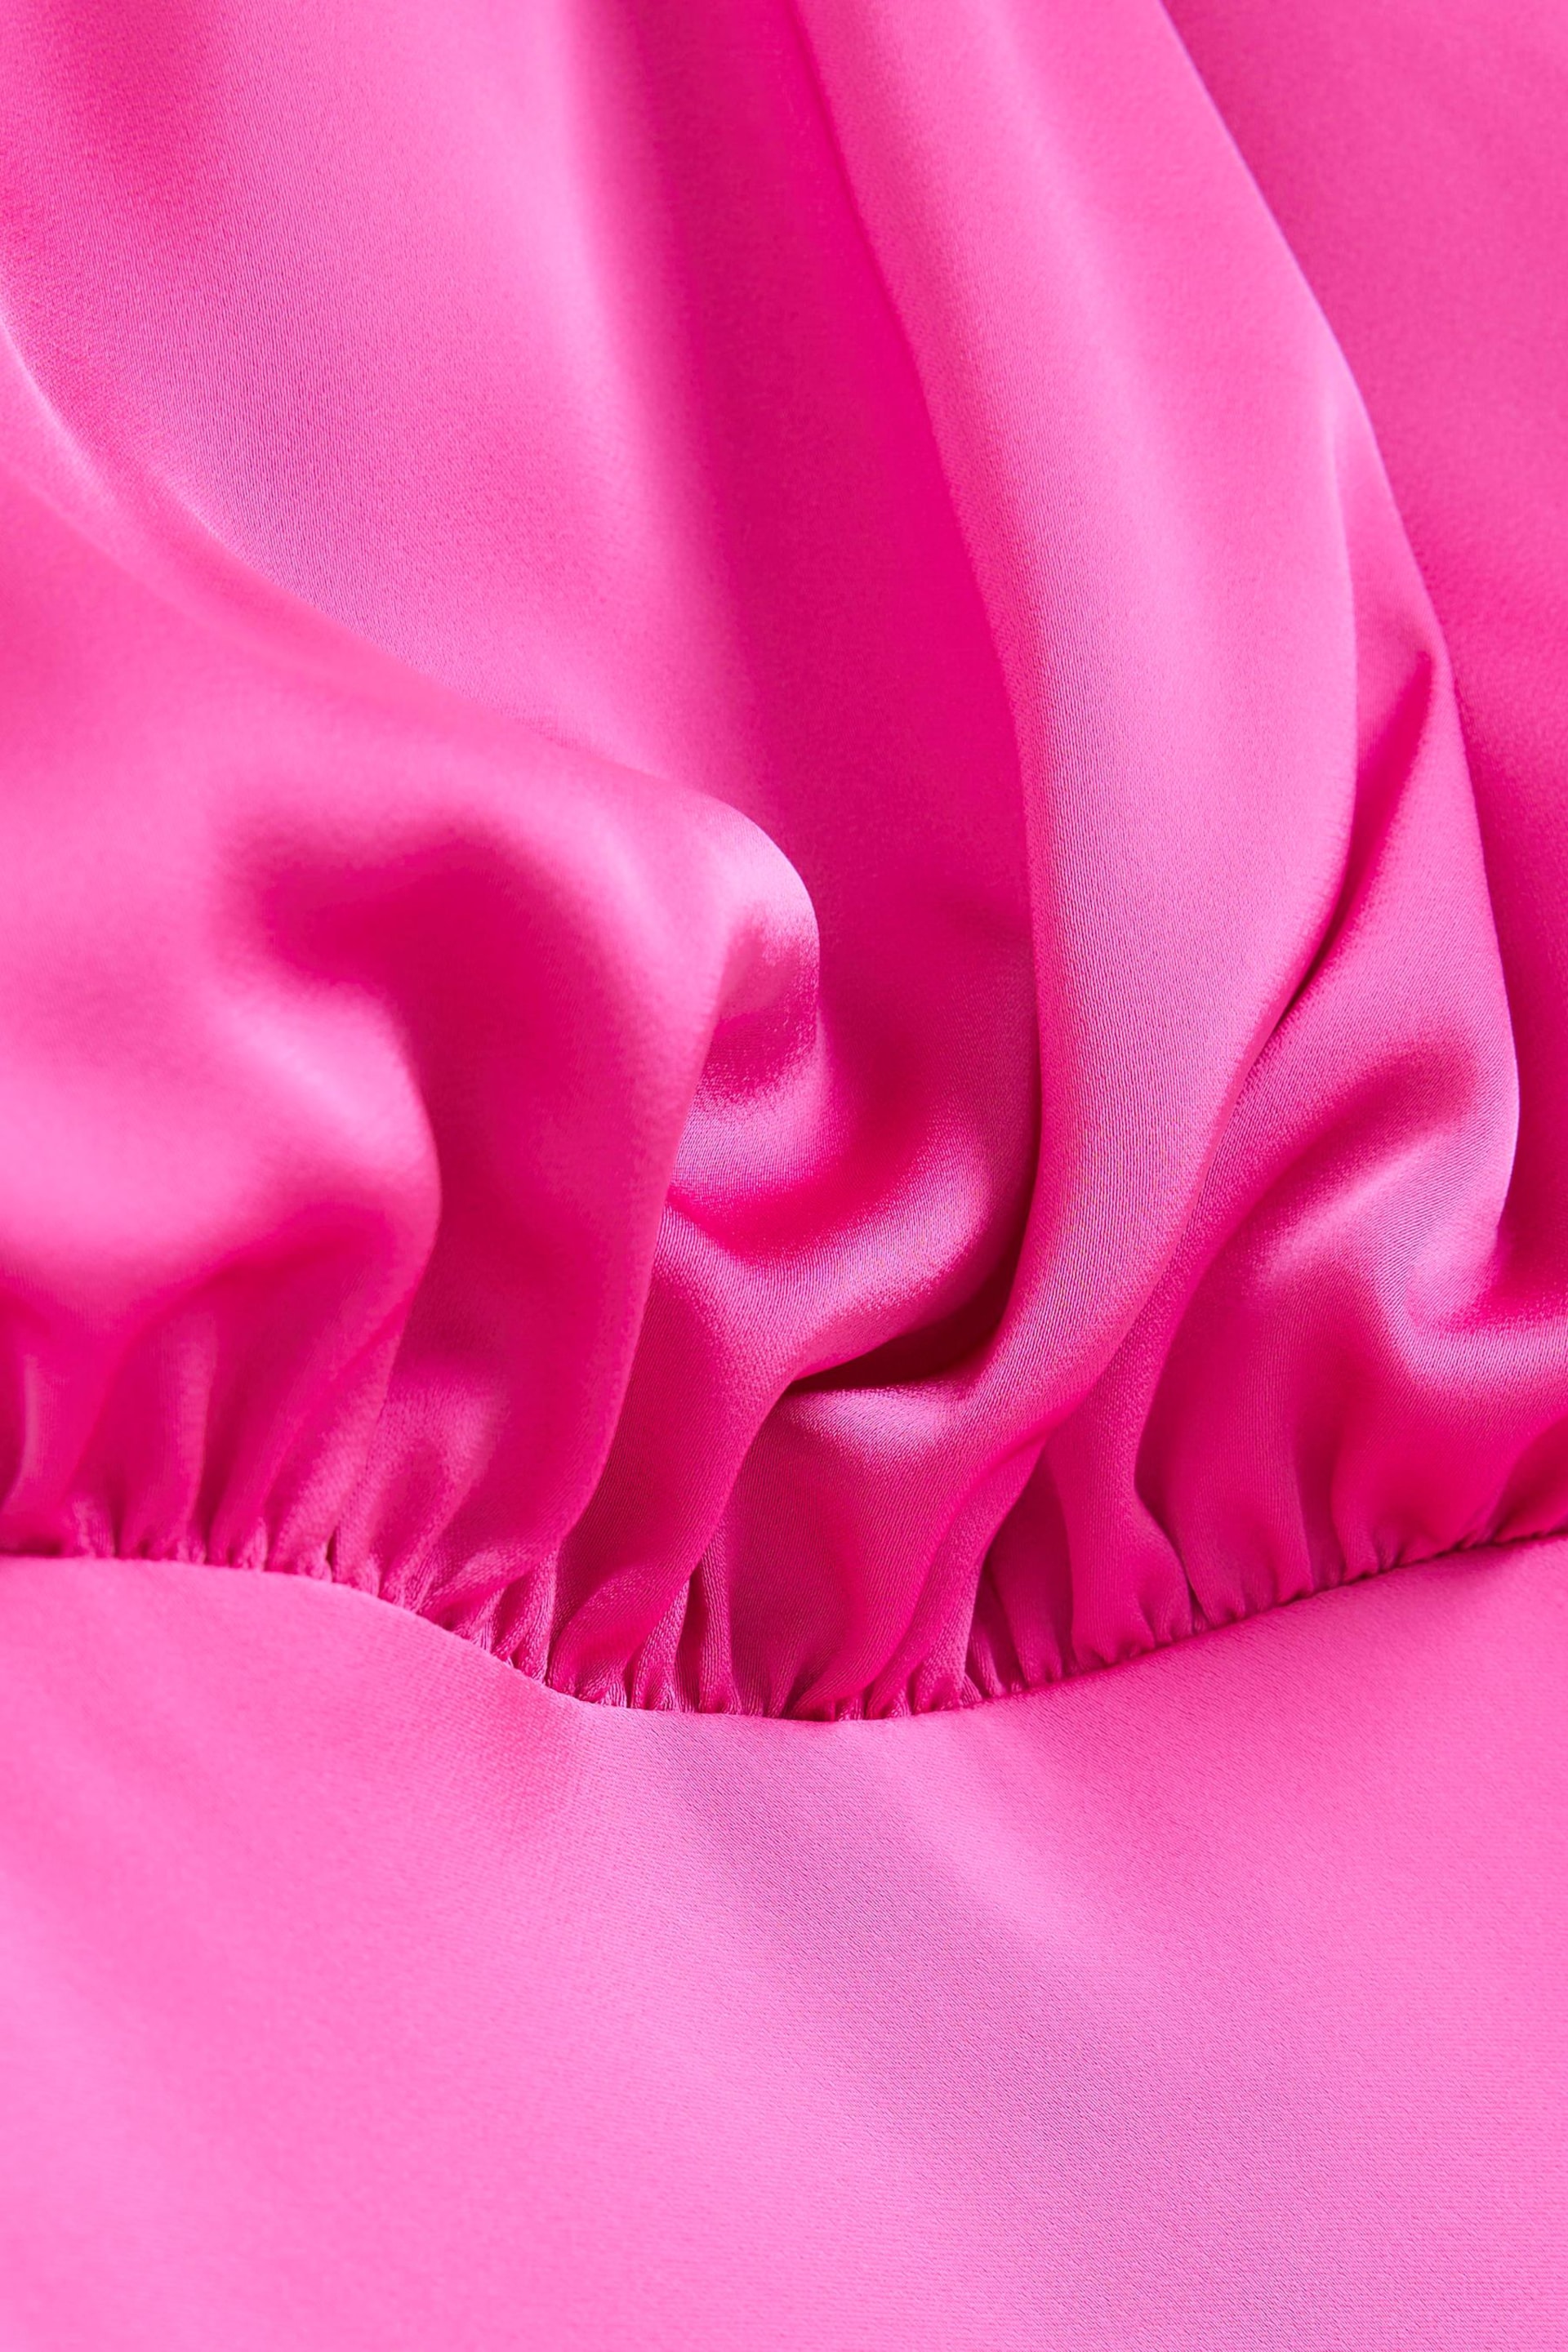 River Island Pink Halter Bridesmaid Dress - Image 5 of 5